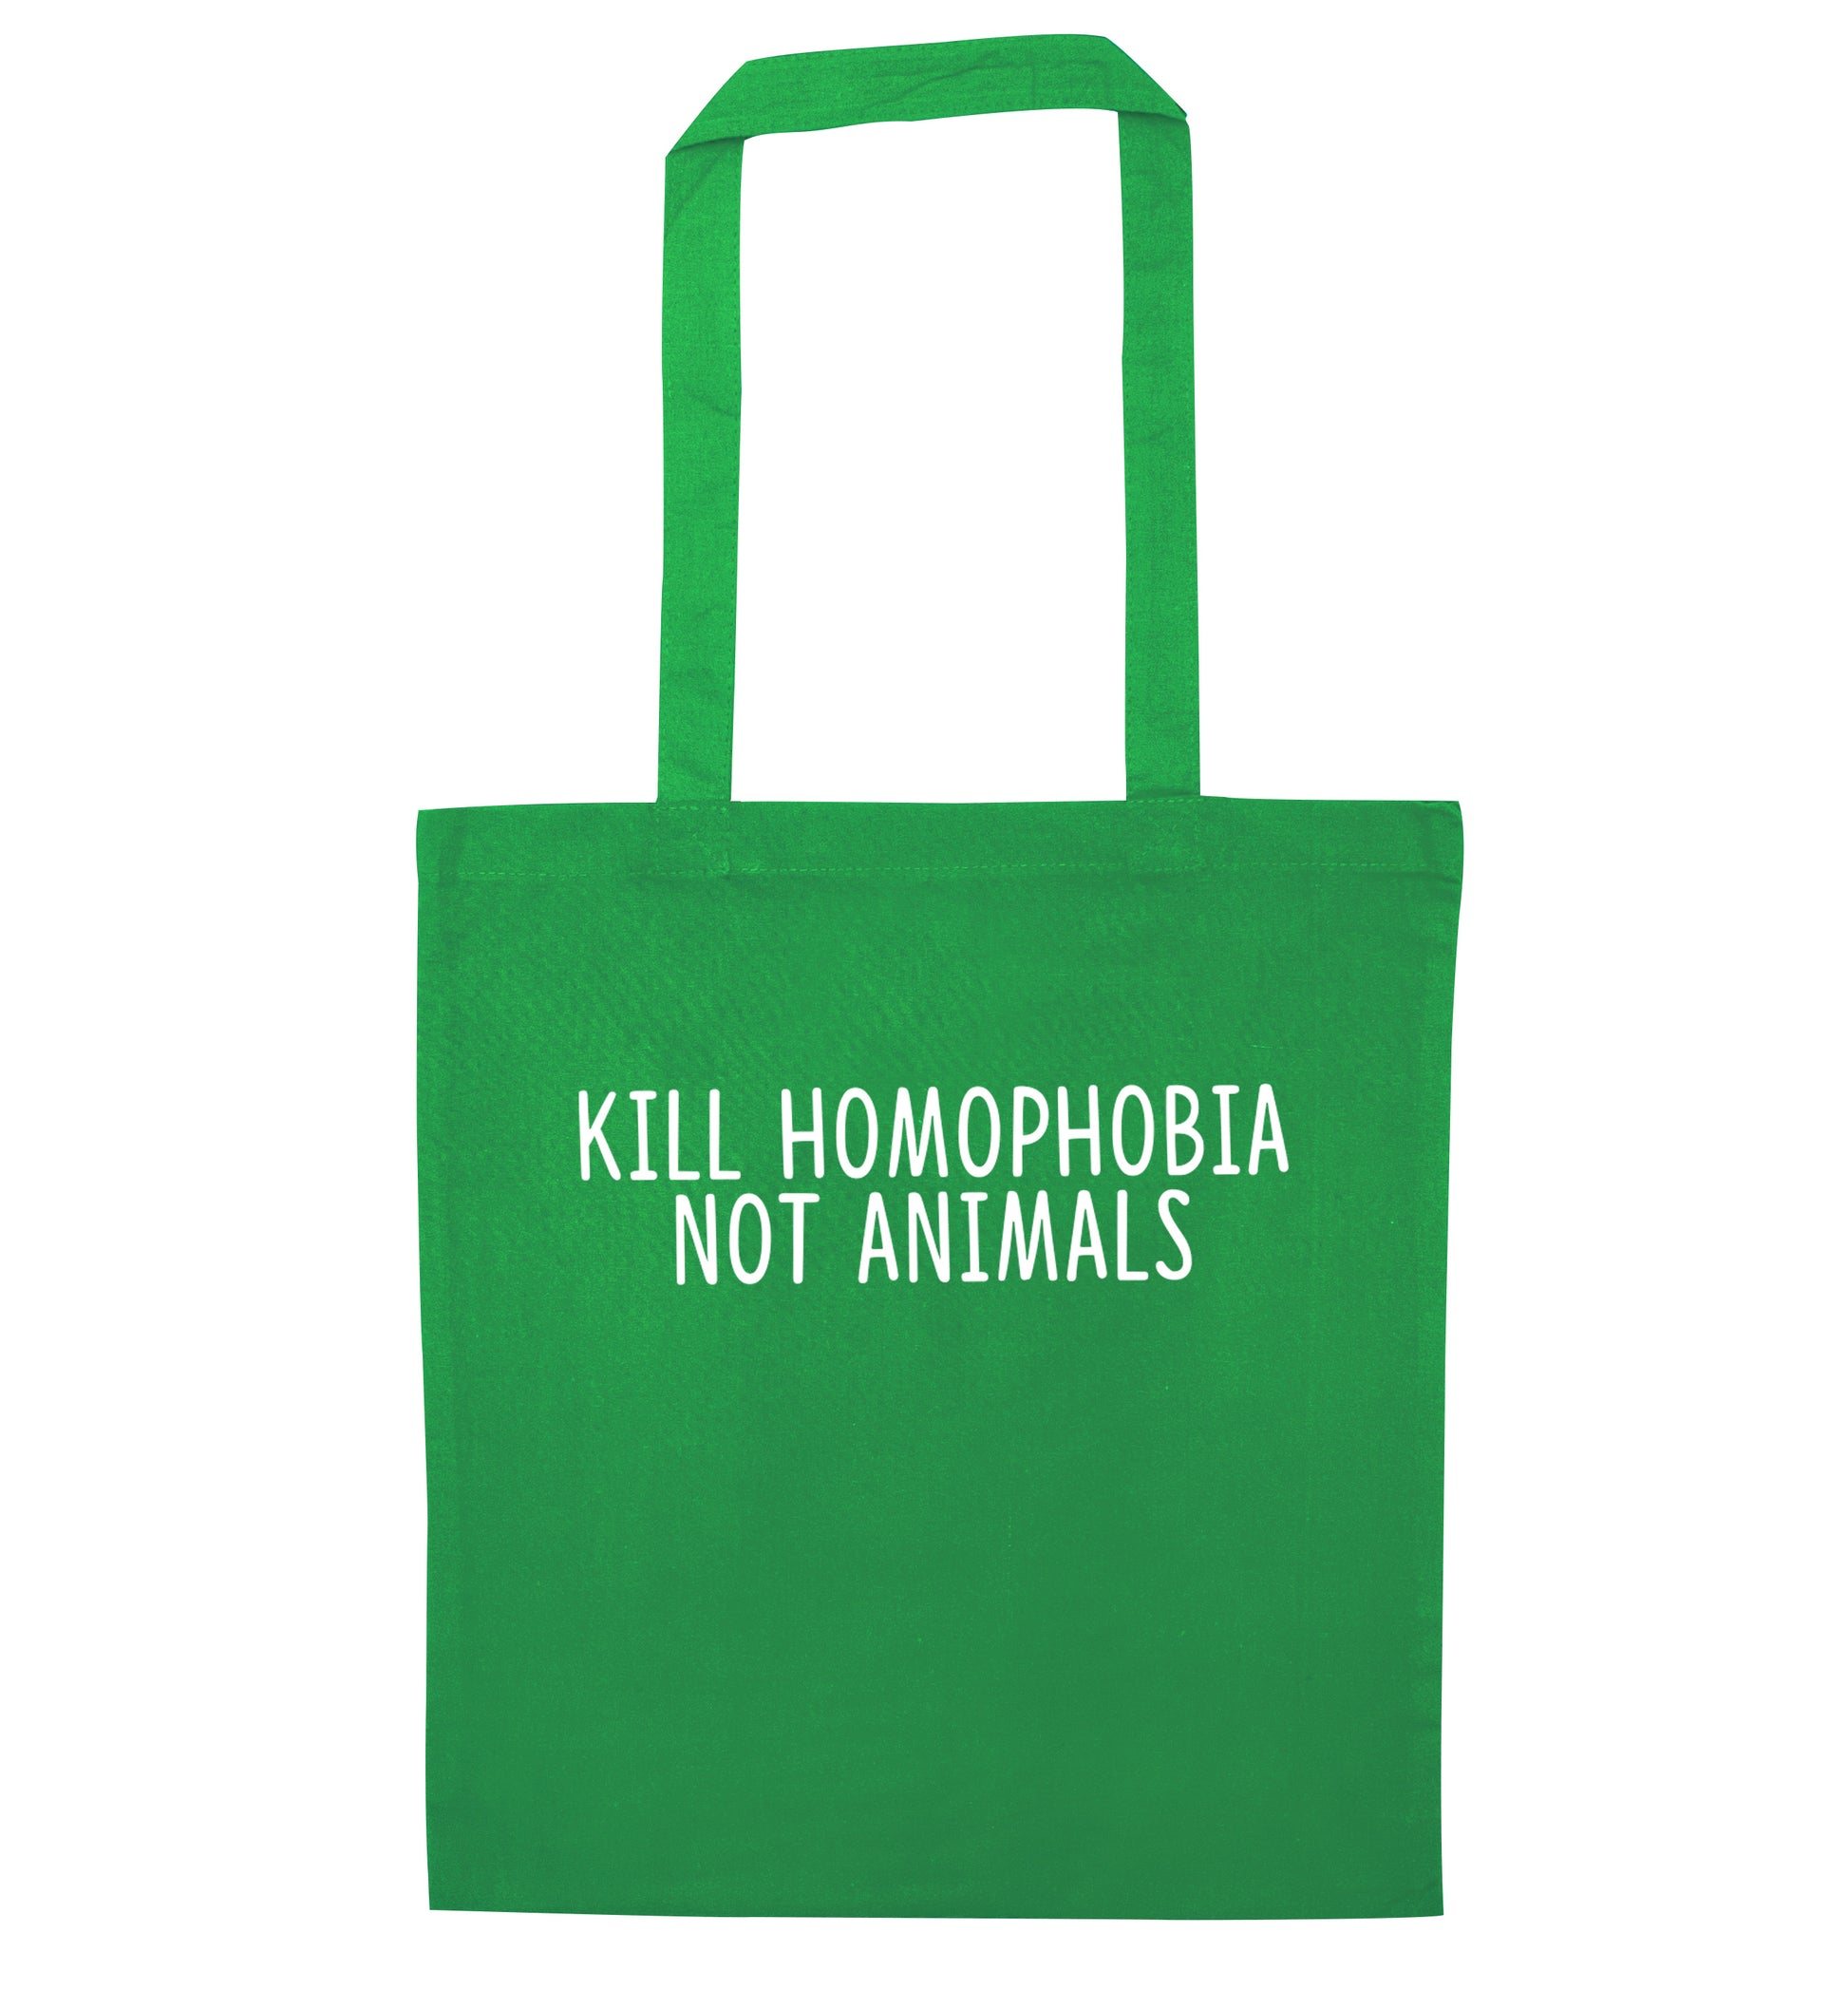 Kill Homophobia Not Animals green tote bag